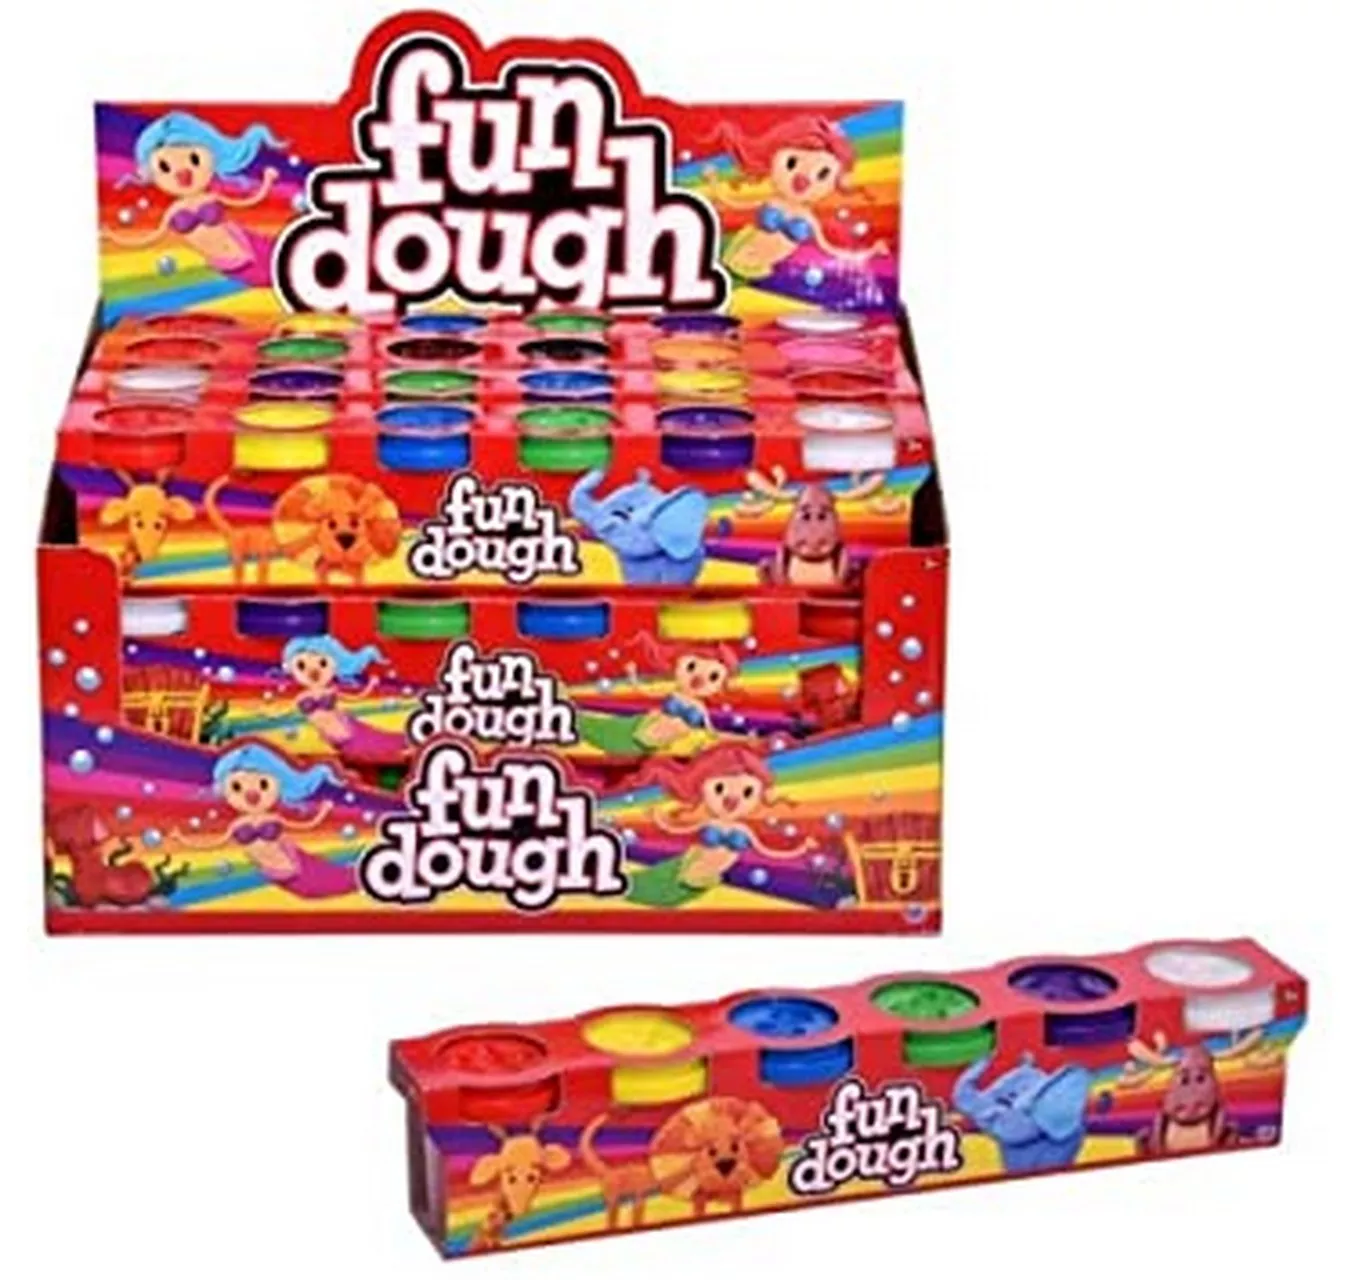 Fun Dough 6pk - Each